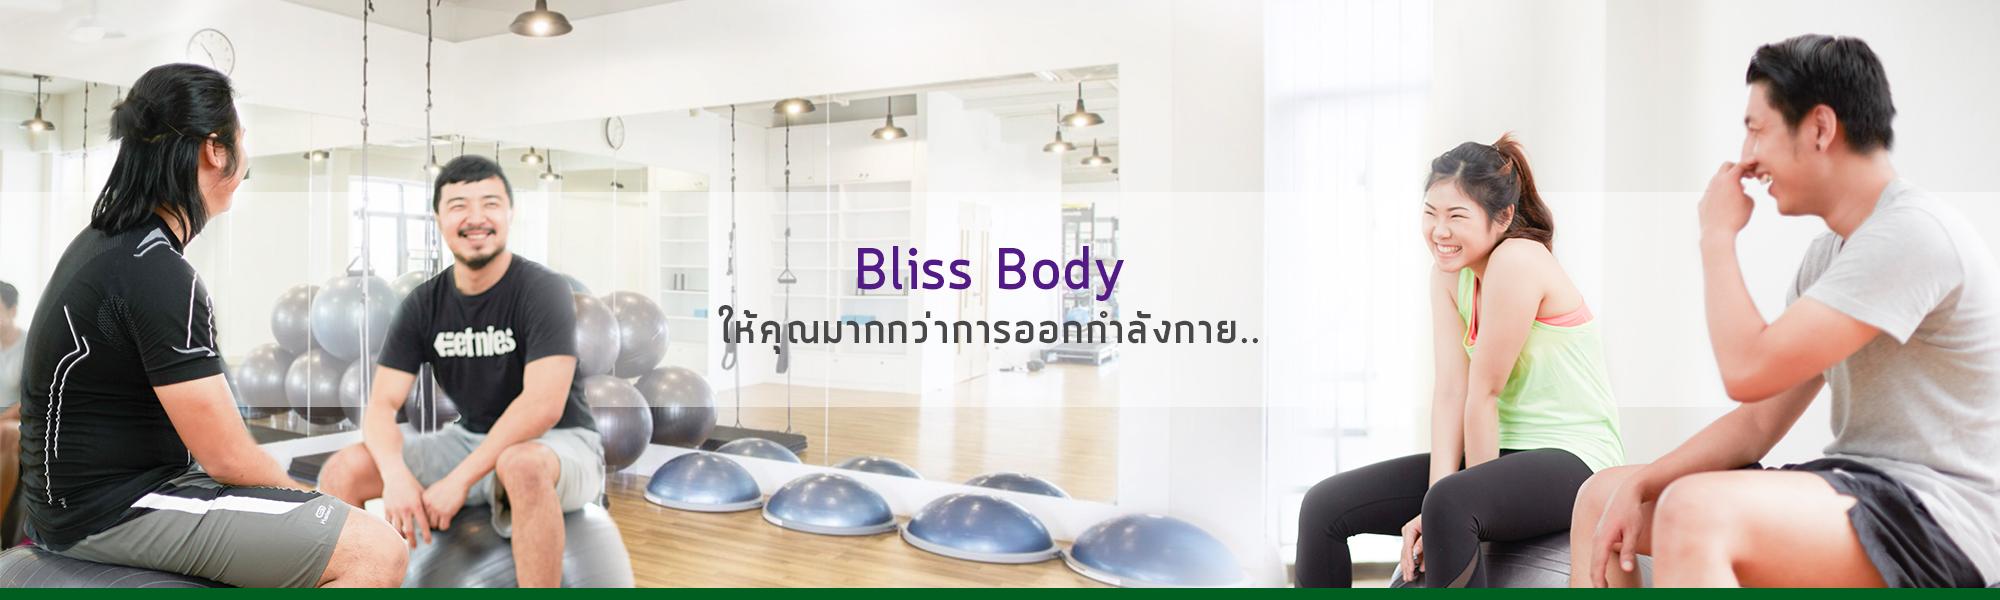 Bliss Body Pilates Studio Image